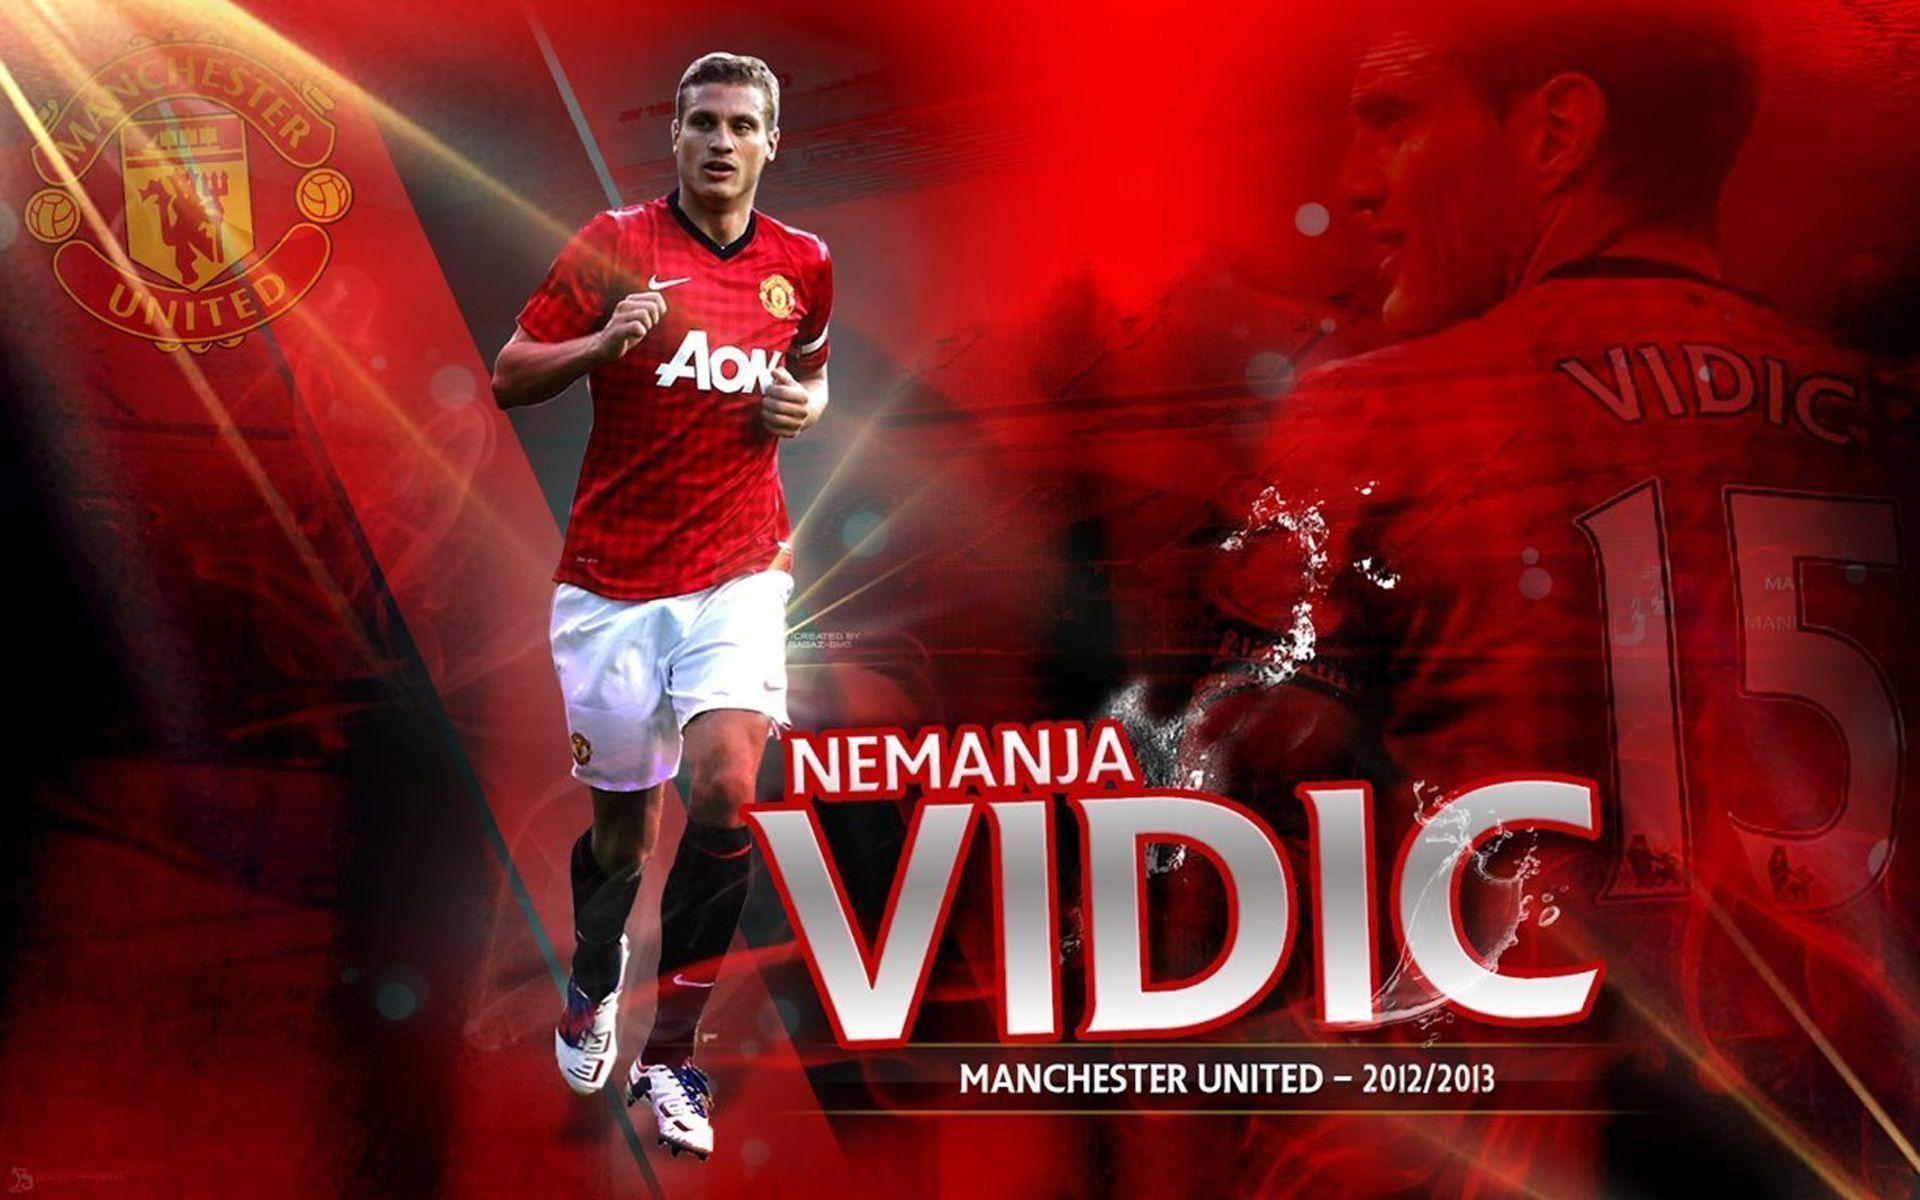 The best player of Manchester United Nemanja Vidic wallpaper